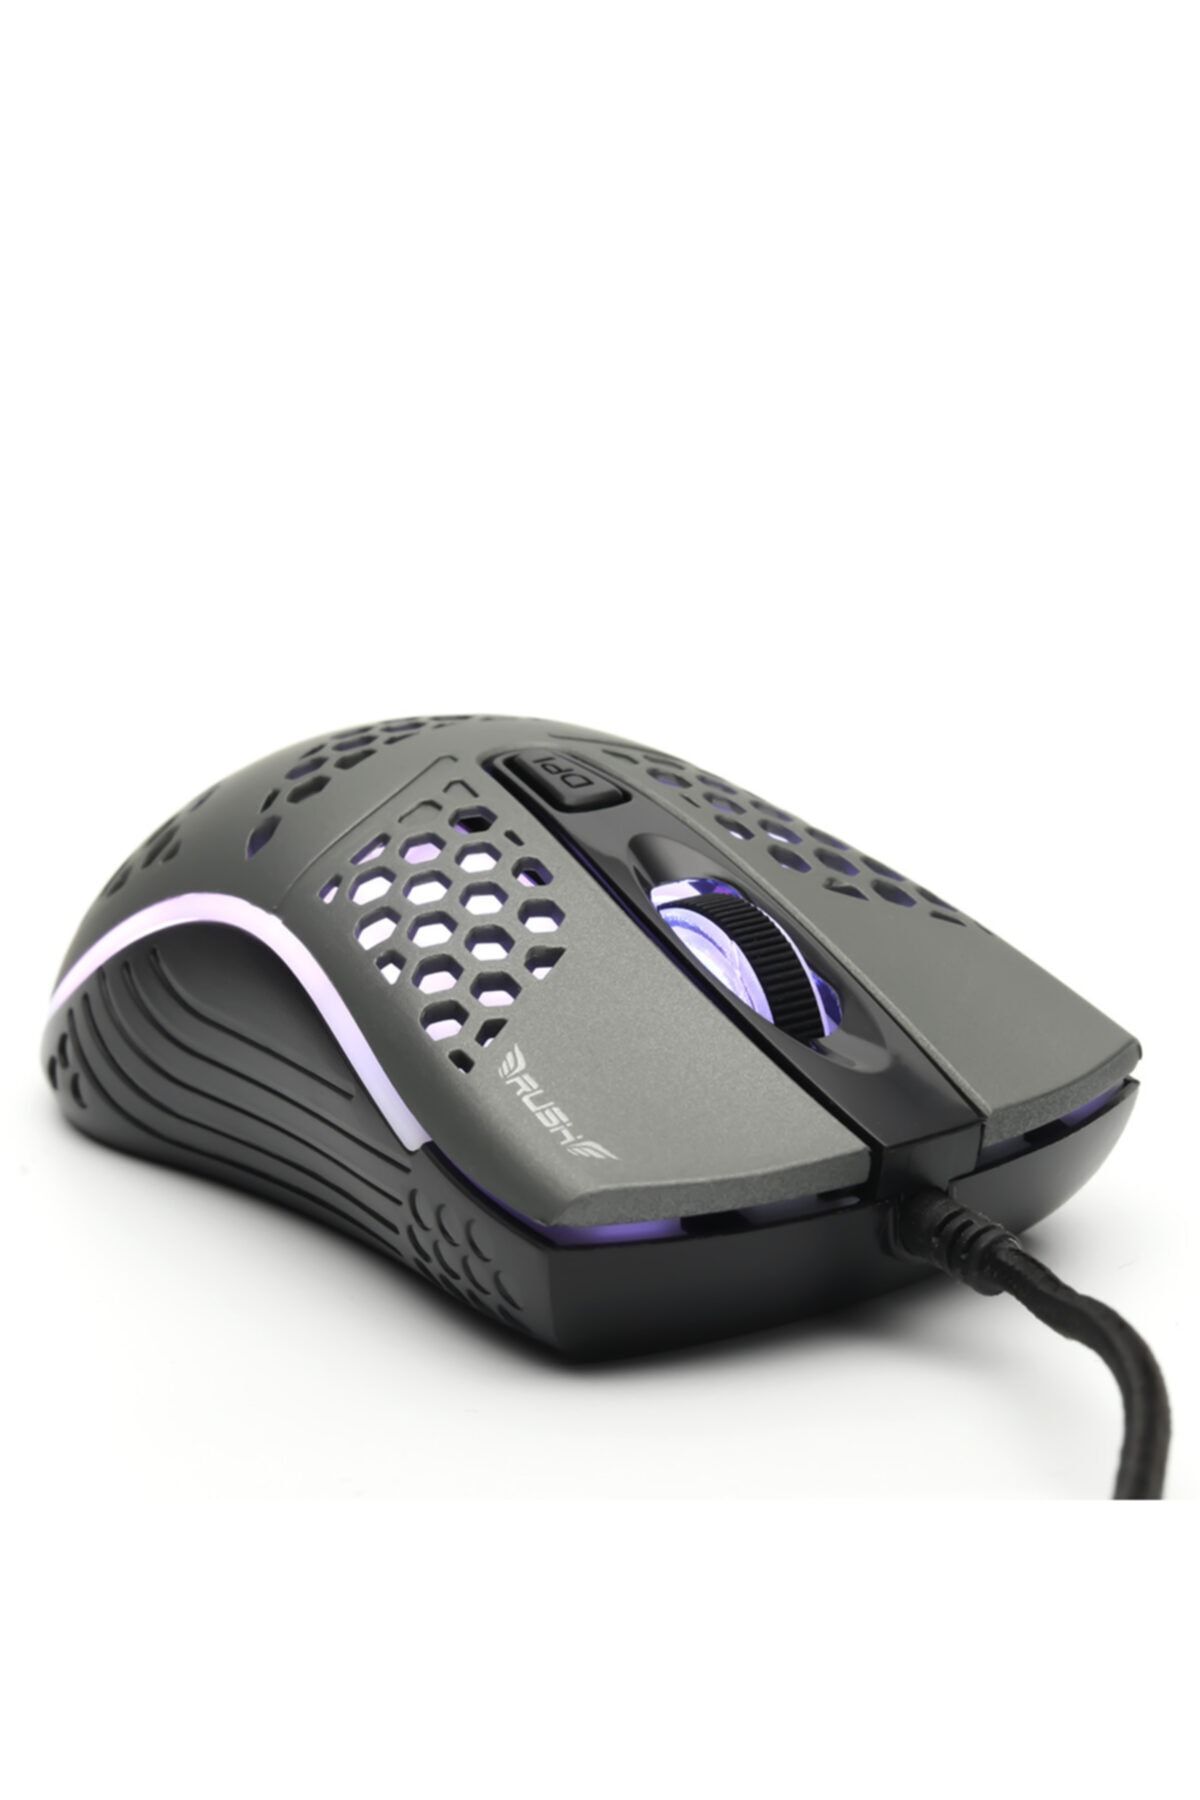 Rush Rm02 Rgb Aydınlatmalı 1600 Dpı Gaming Oyuncu Mouse